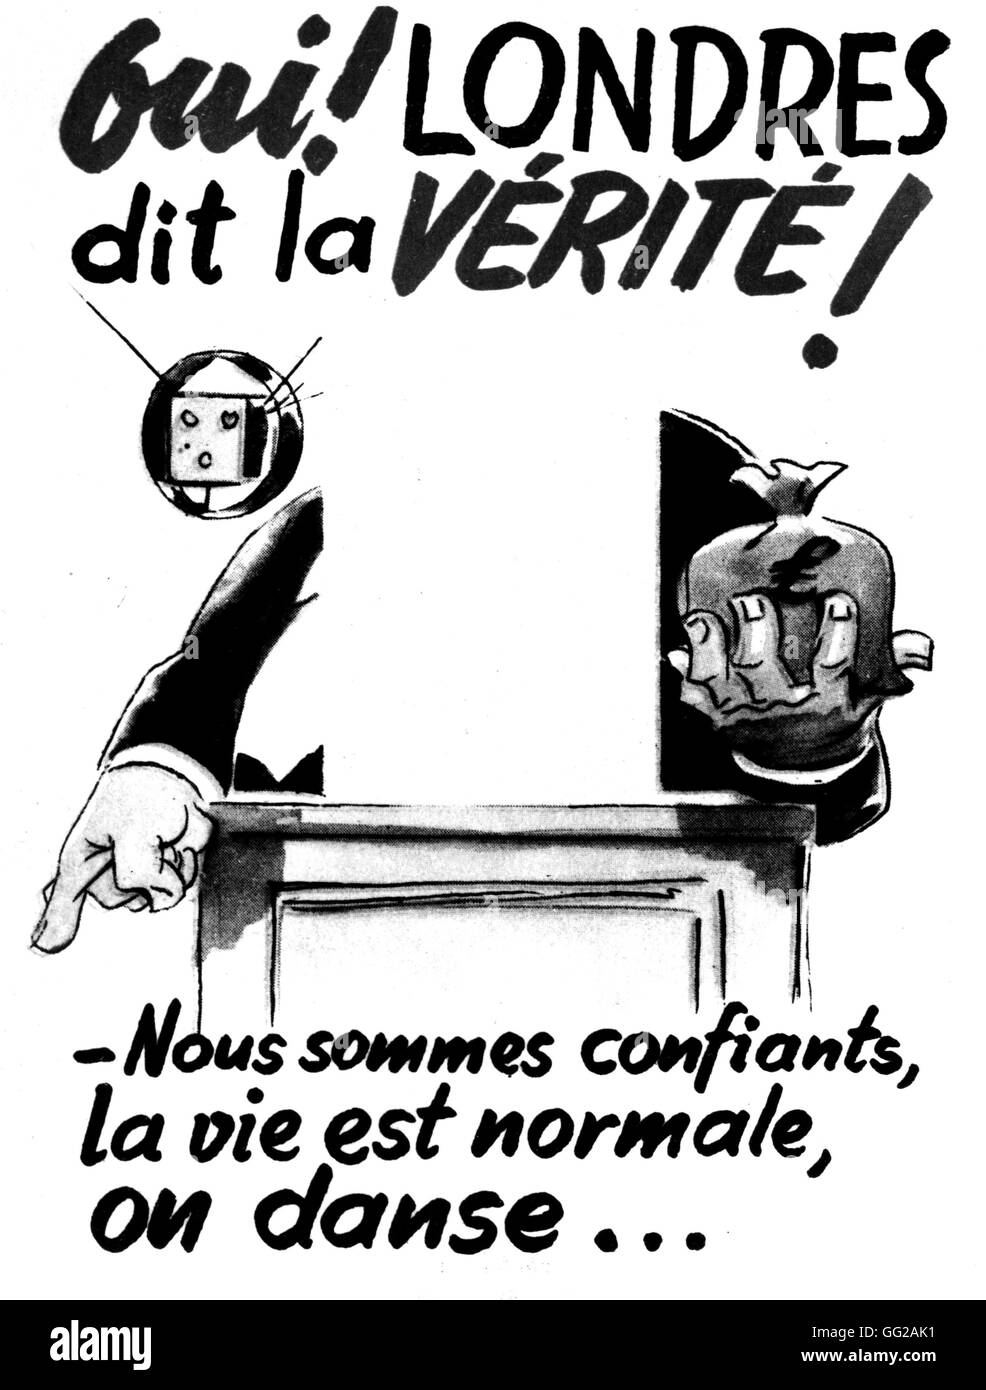 Propaganda against London radio broadcasting 1940 France - World War II  City of Paris Library Stock Photo - Alamy